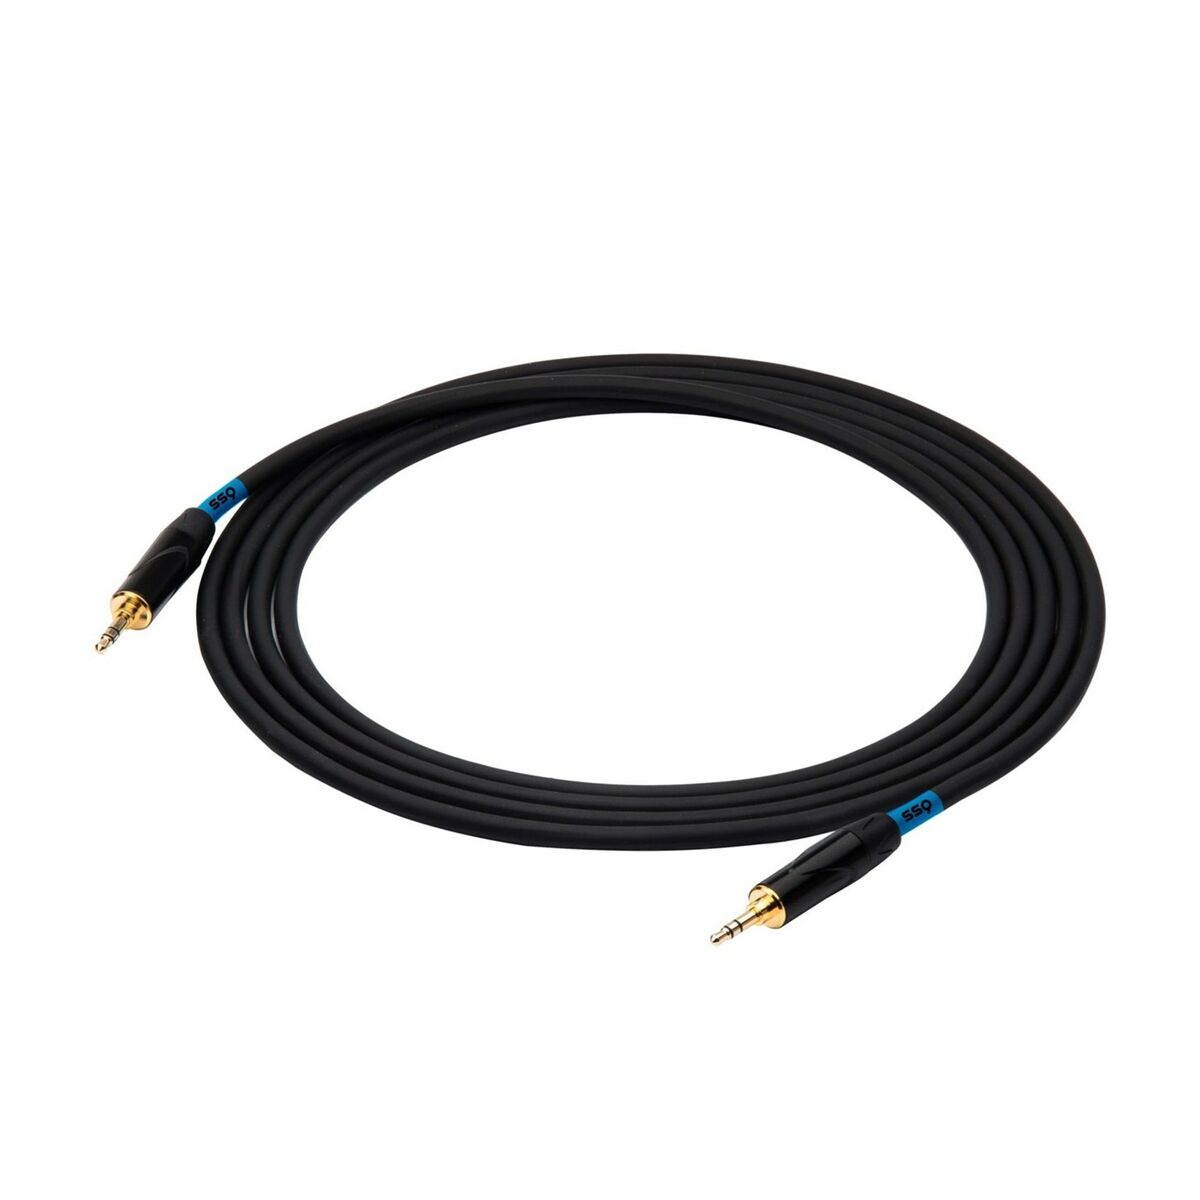 USB Cable Sound station quality (SSQ) SS-1425 Black 2 m